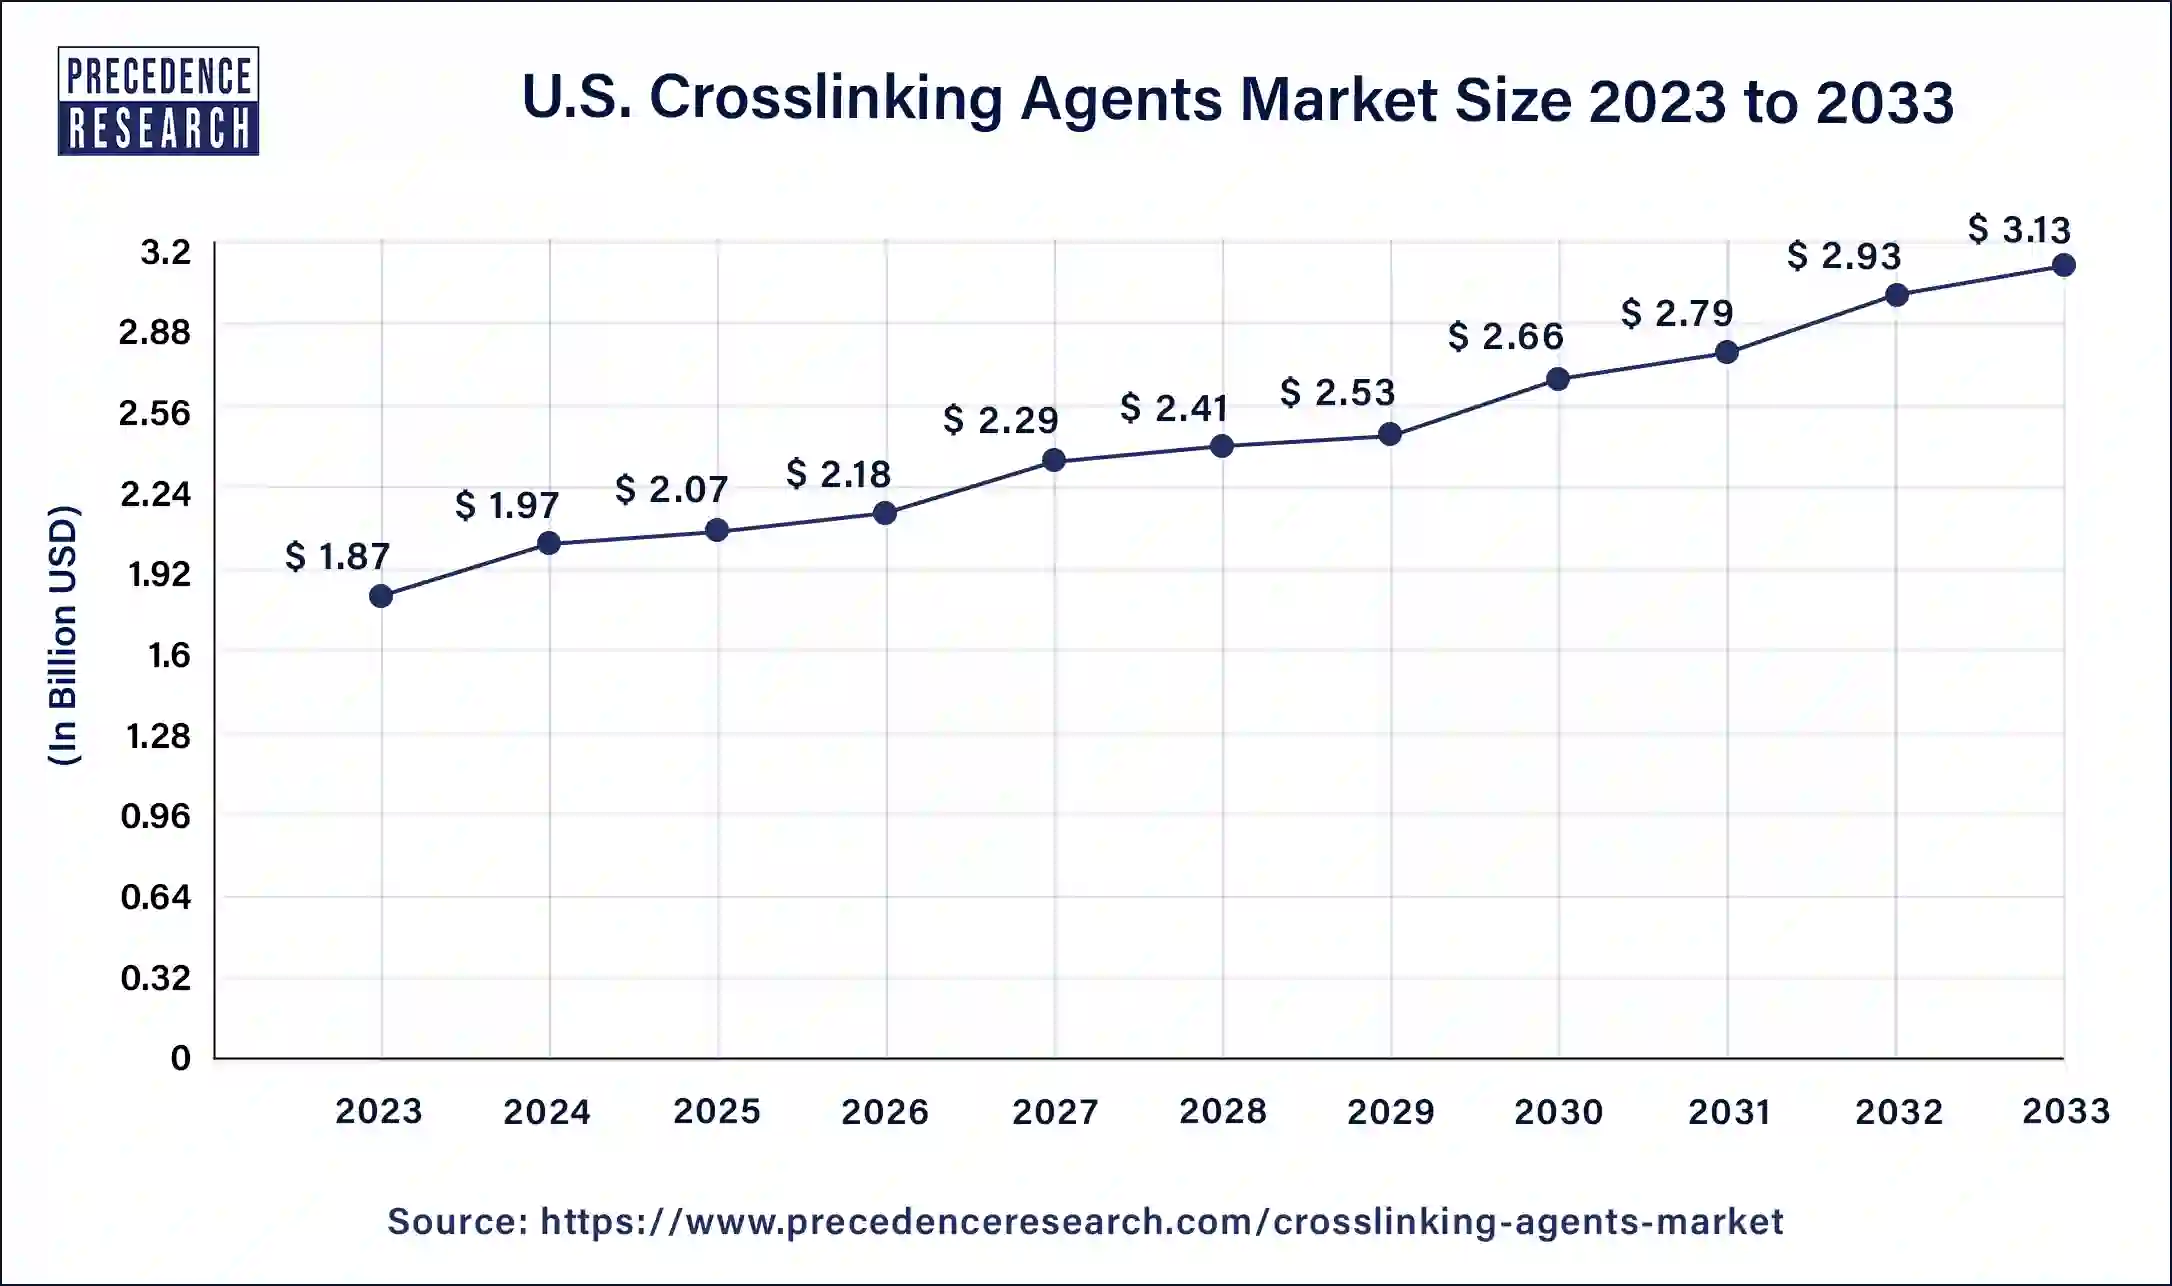 U.S. Crosslinking Agents Market Size 2024 to 2033